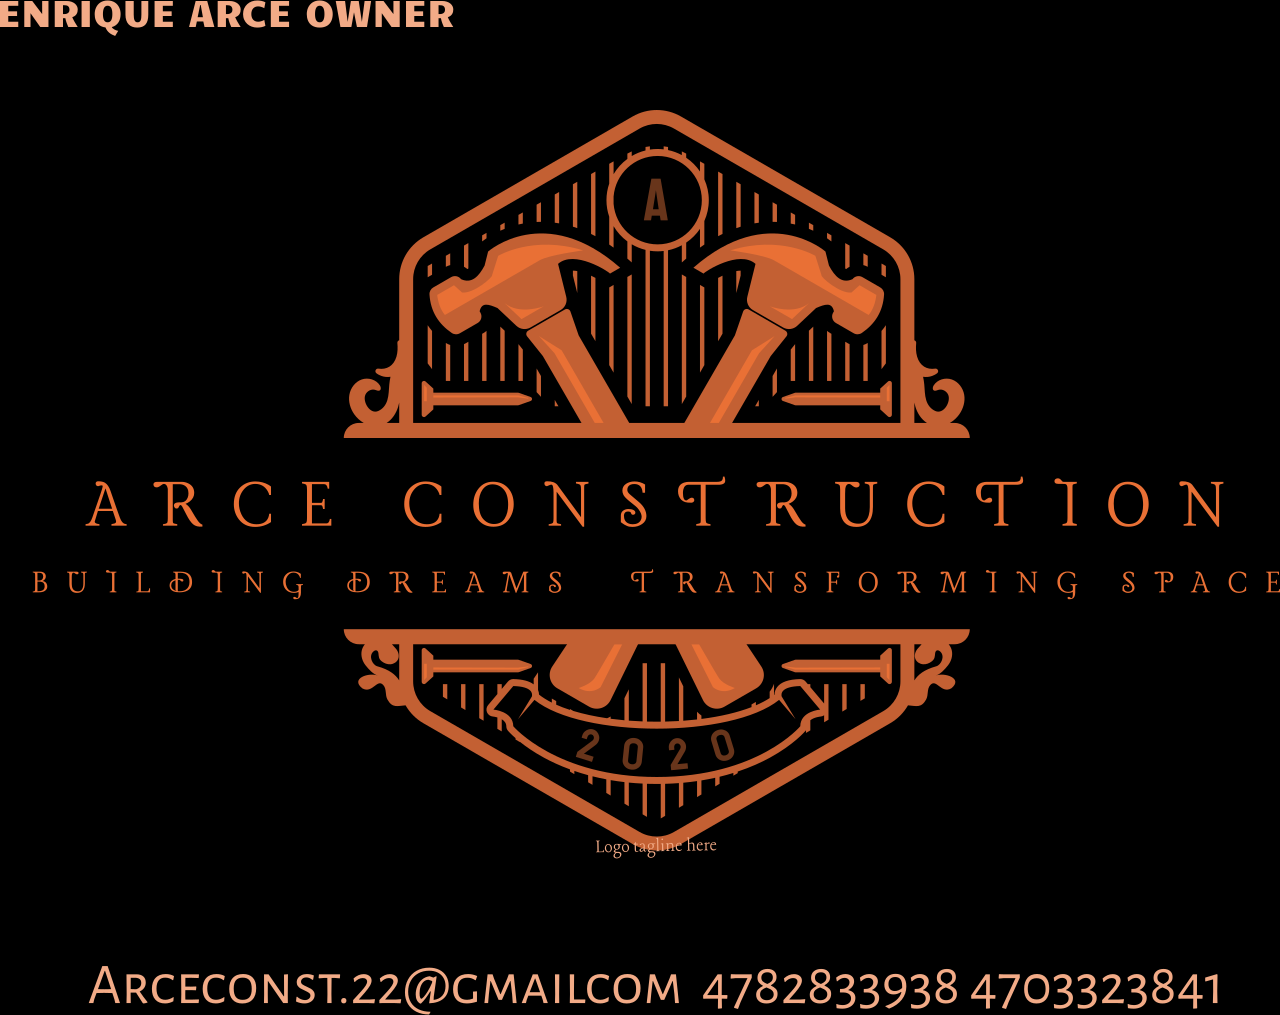 ARCE CONSTRUCTION's logo